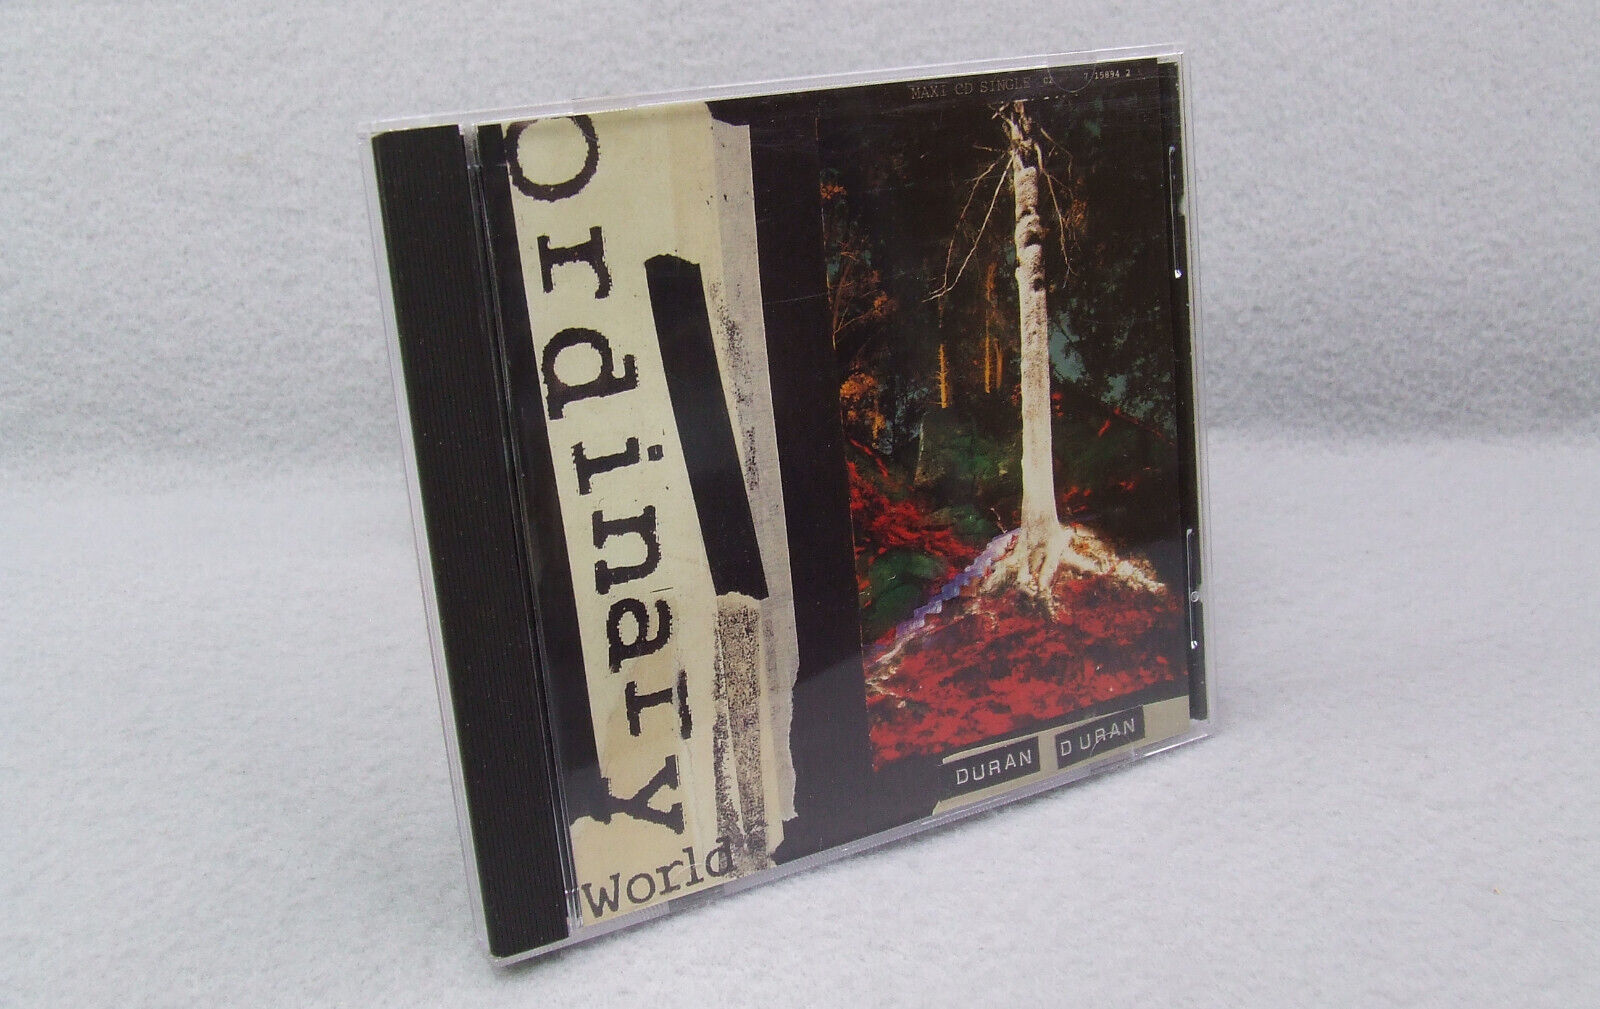 Duran Duran - Ordinary World (4-Track Maxi Single CD, 1993 Capitol)